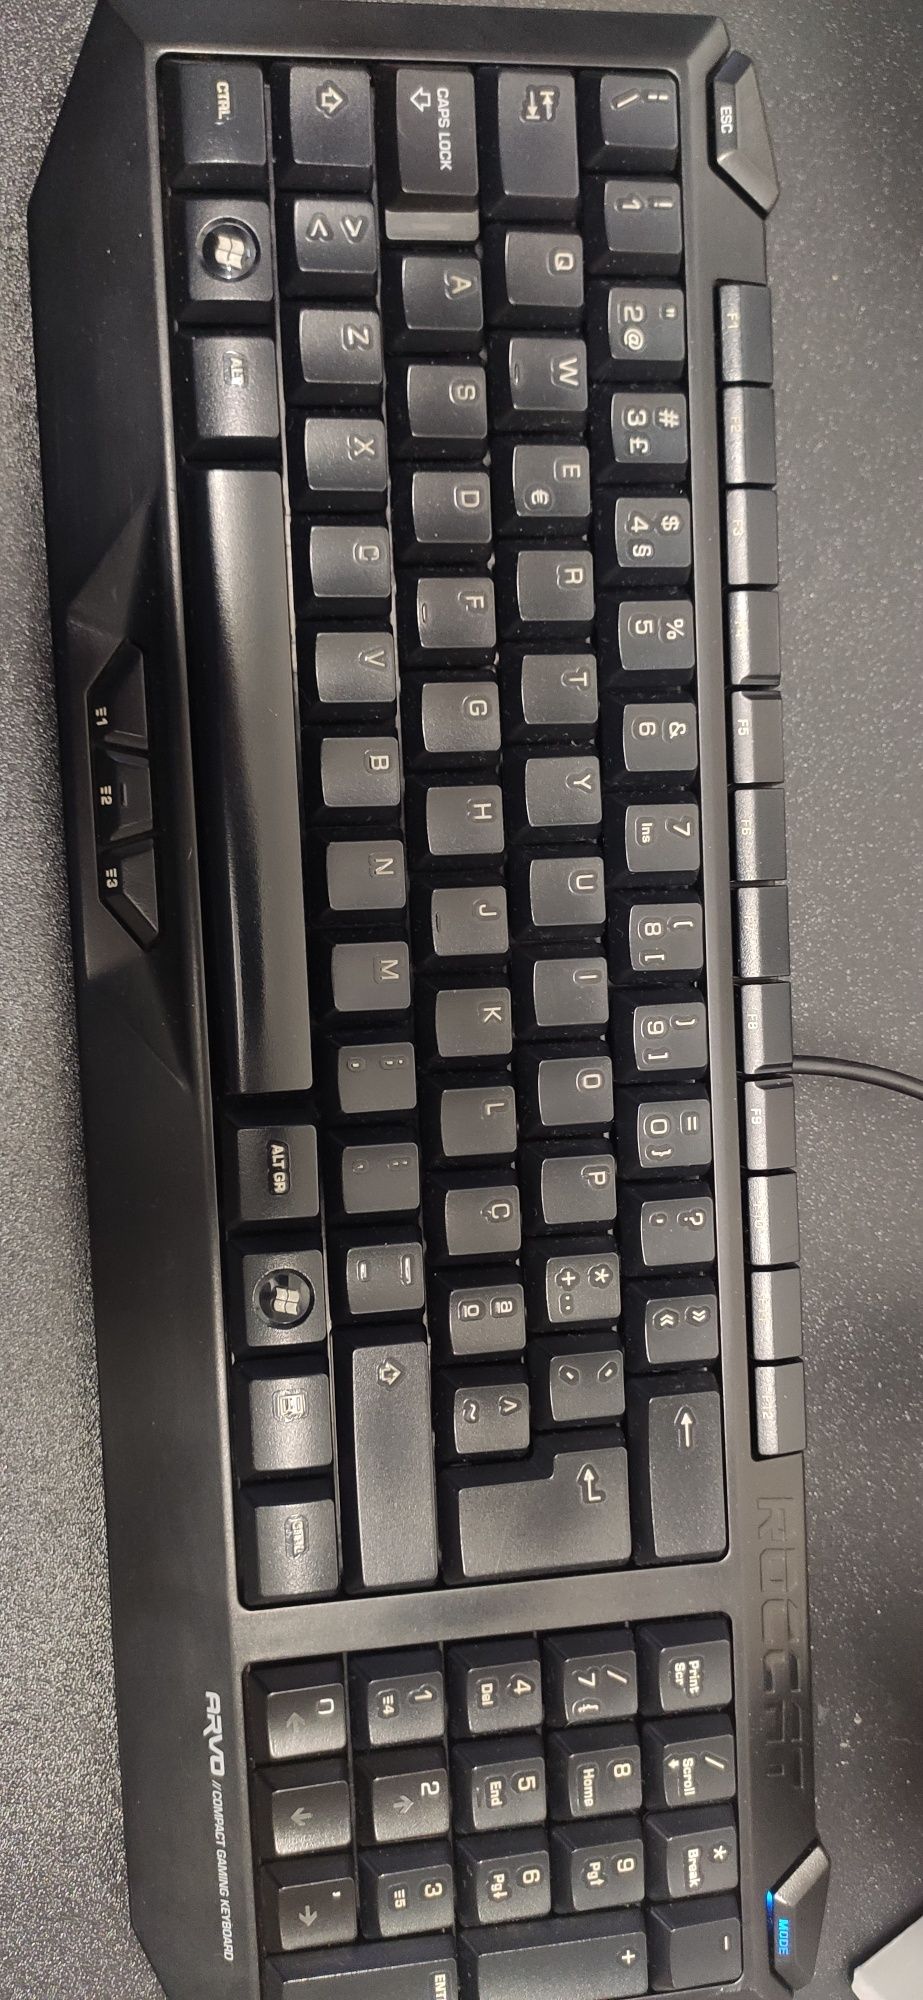 Teclado roccat arco Compact gaming keyboard